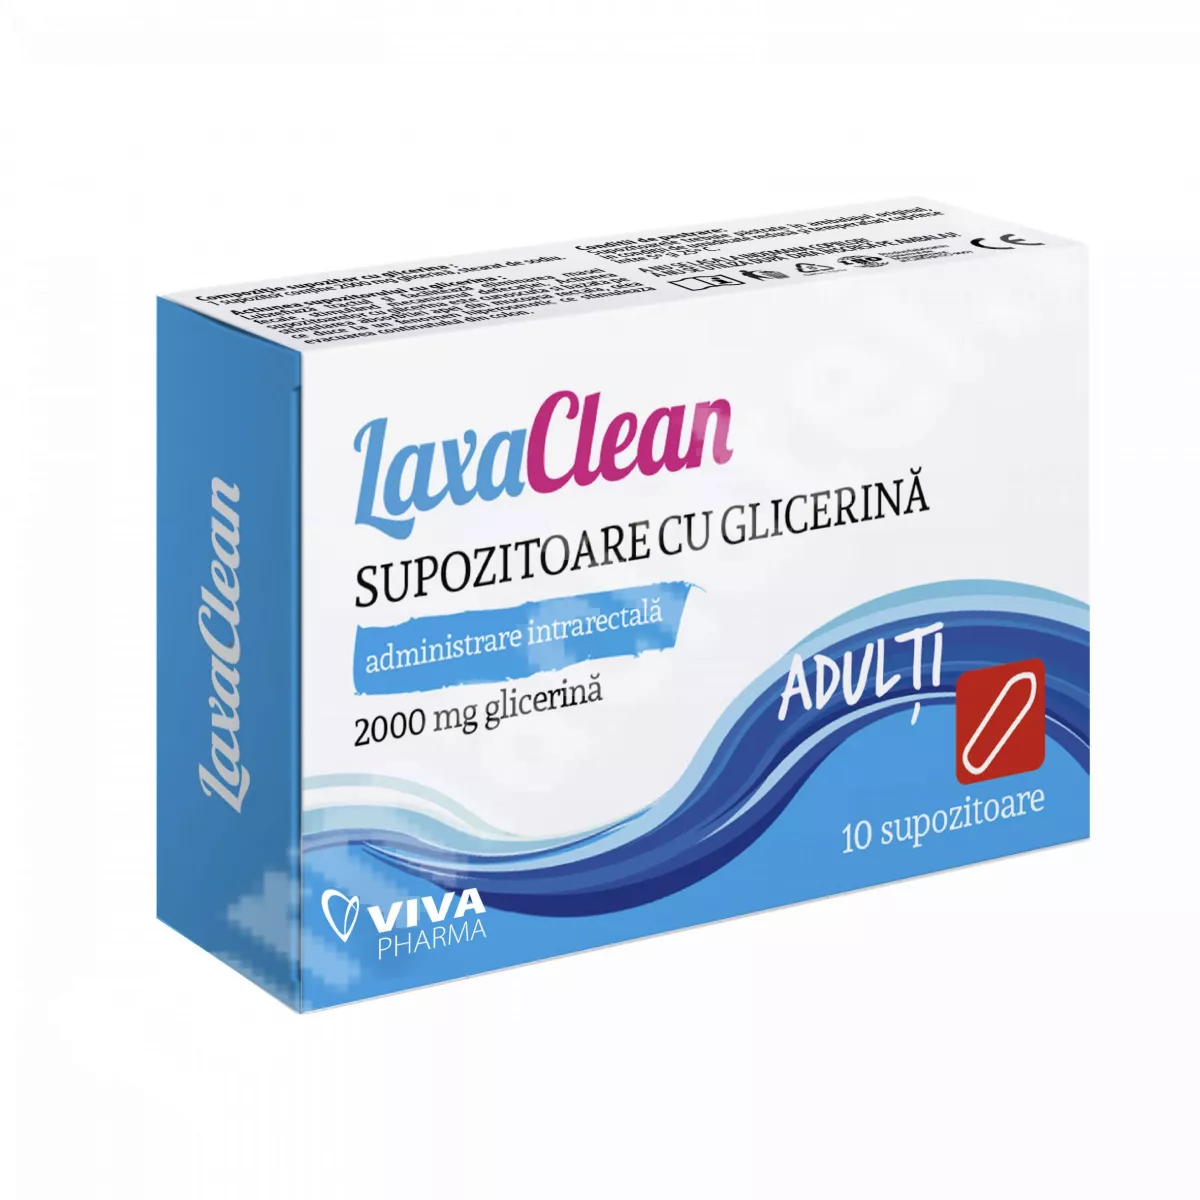 Supozitoare cu glicerina pentru adulti LaxaClean, 10 bucati, Viva Pharma, [],nordpharm.ro